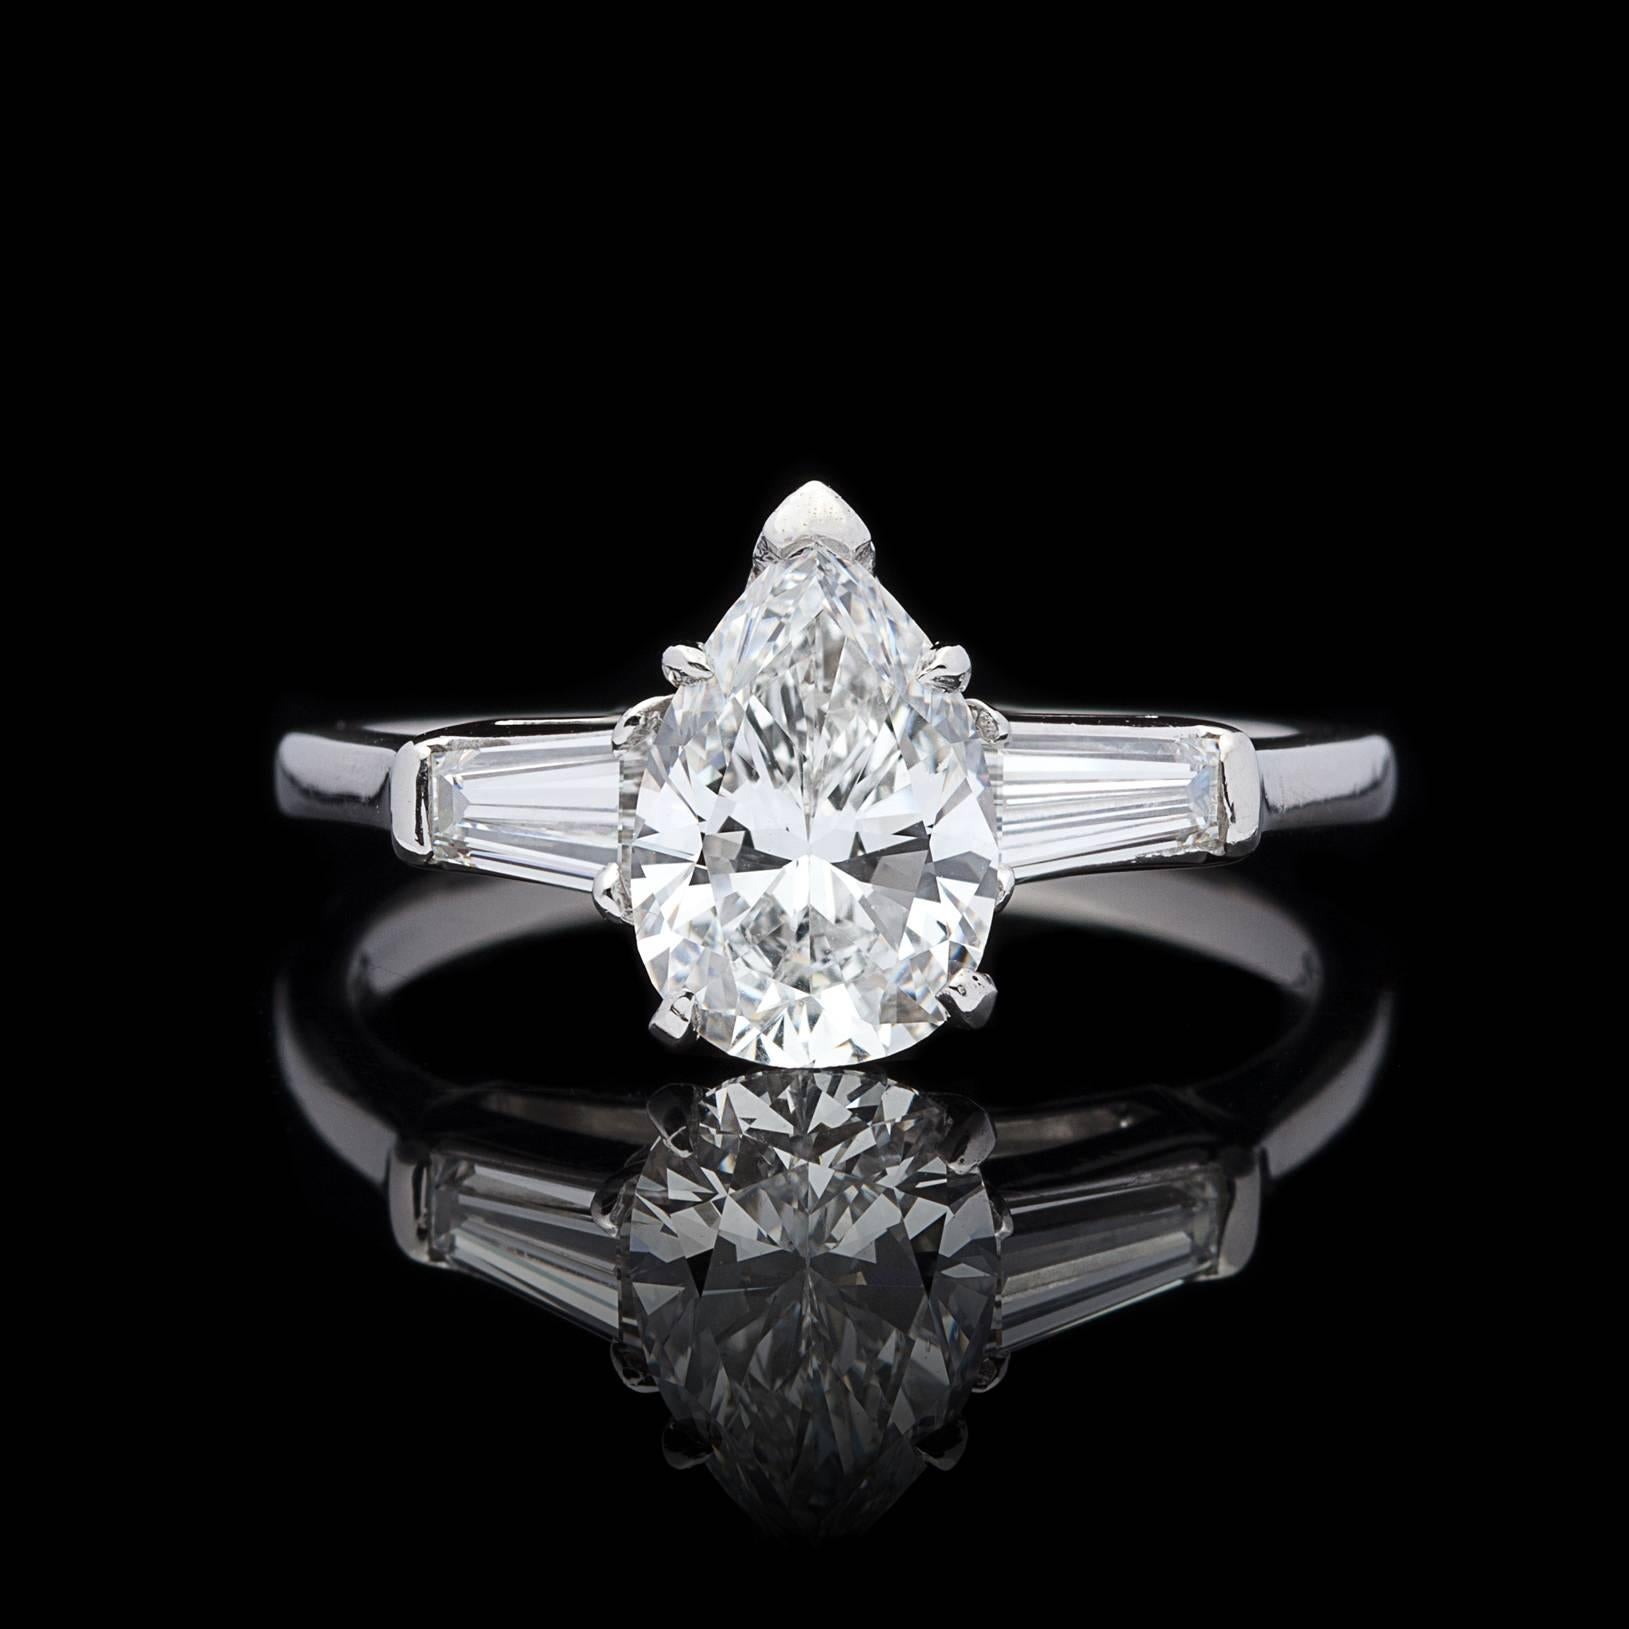 1.3 carat pear shaped diamond ring